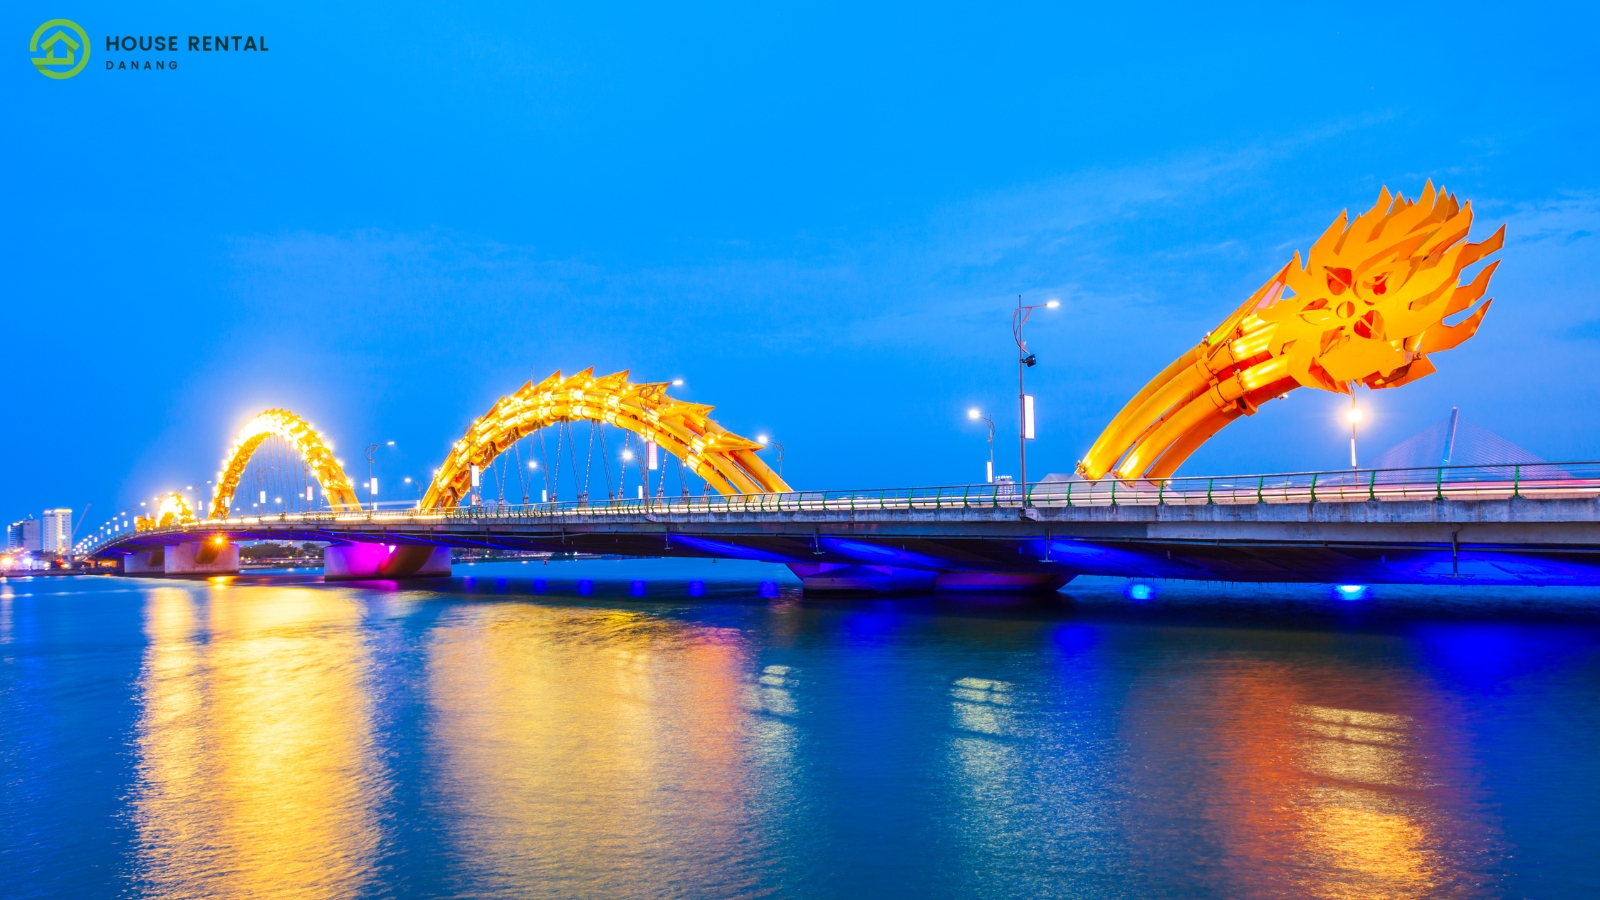 A dragon statue on a bridge in Da Nang, ensuring safety at night.